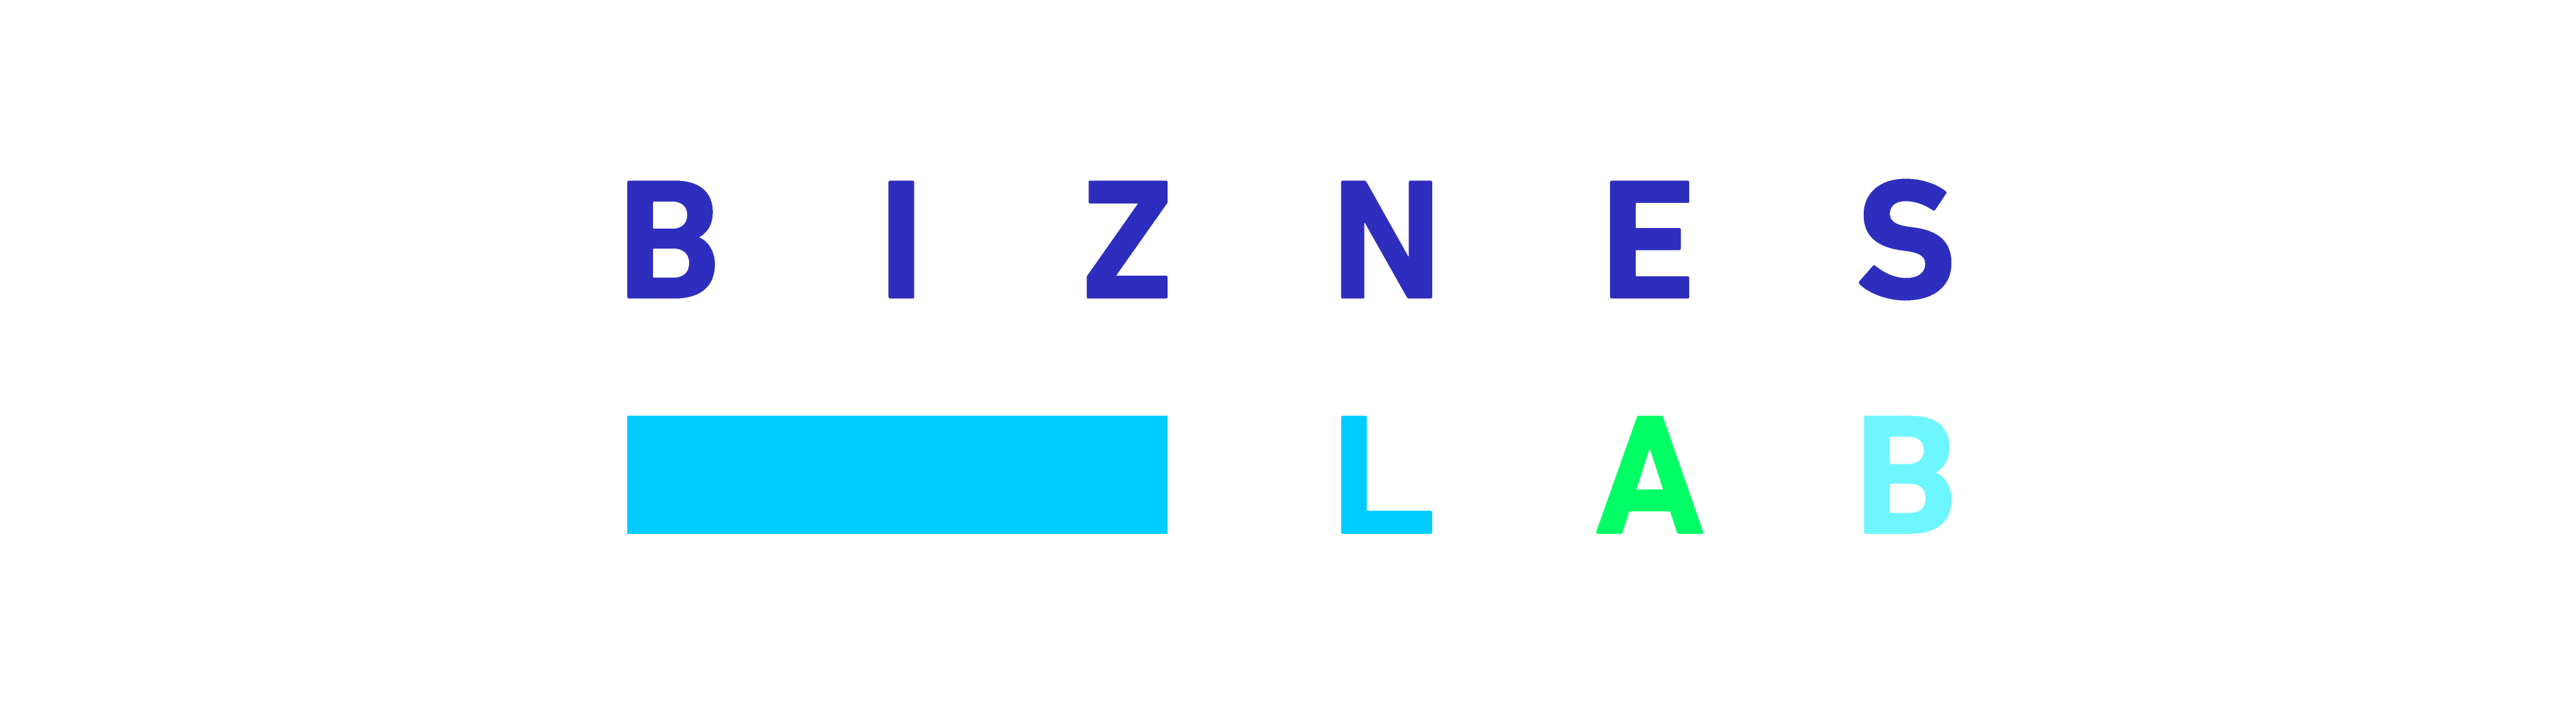 logo projektu BiznesLab